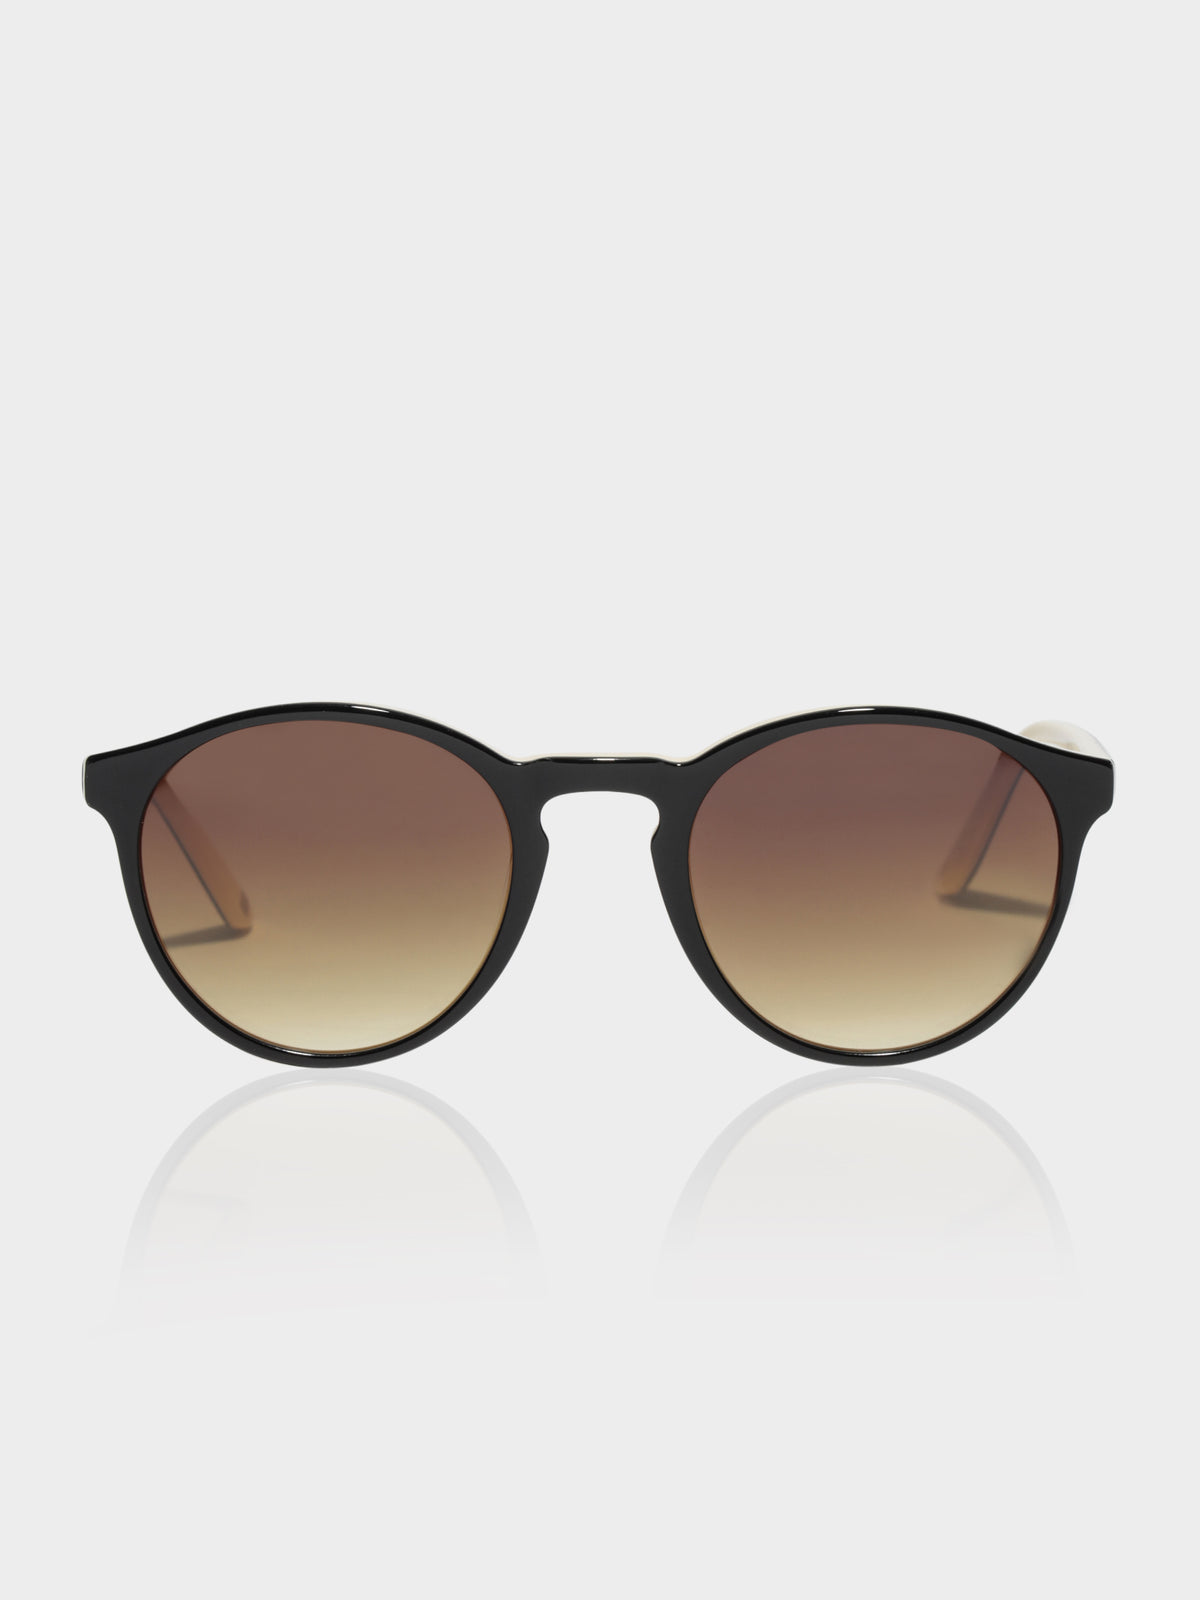 CL7644 Paco Sunglasses in Black Beige